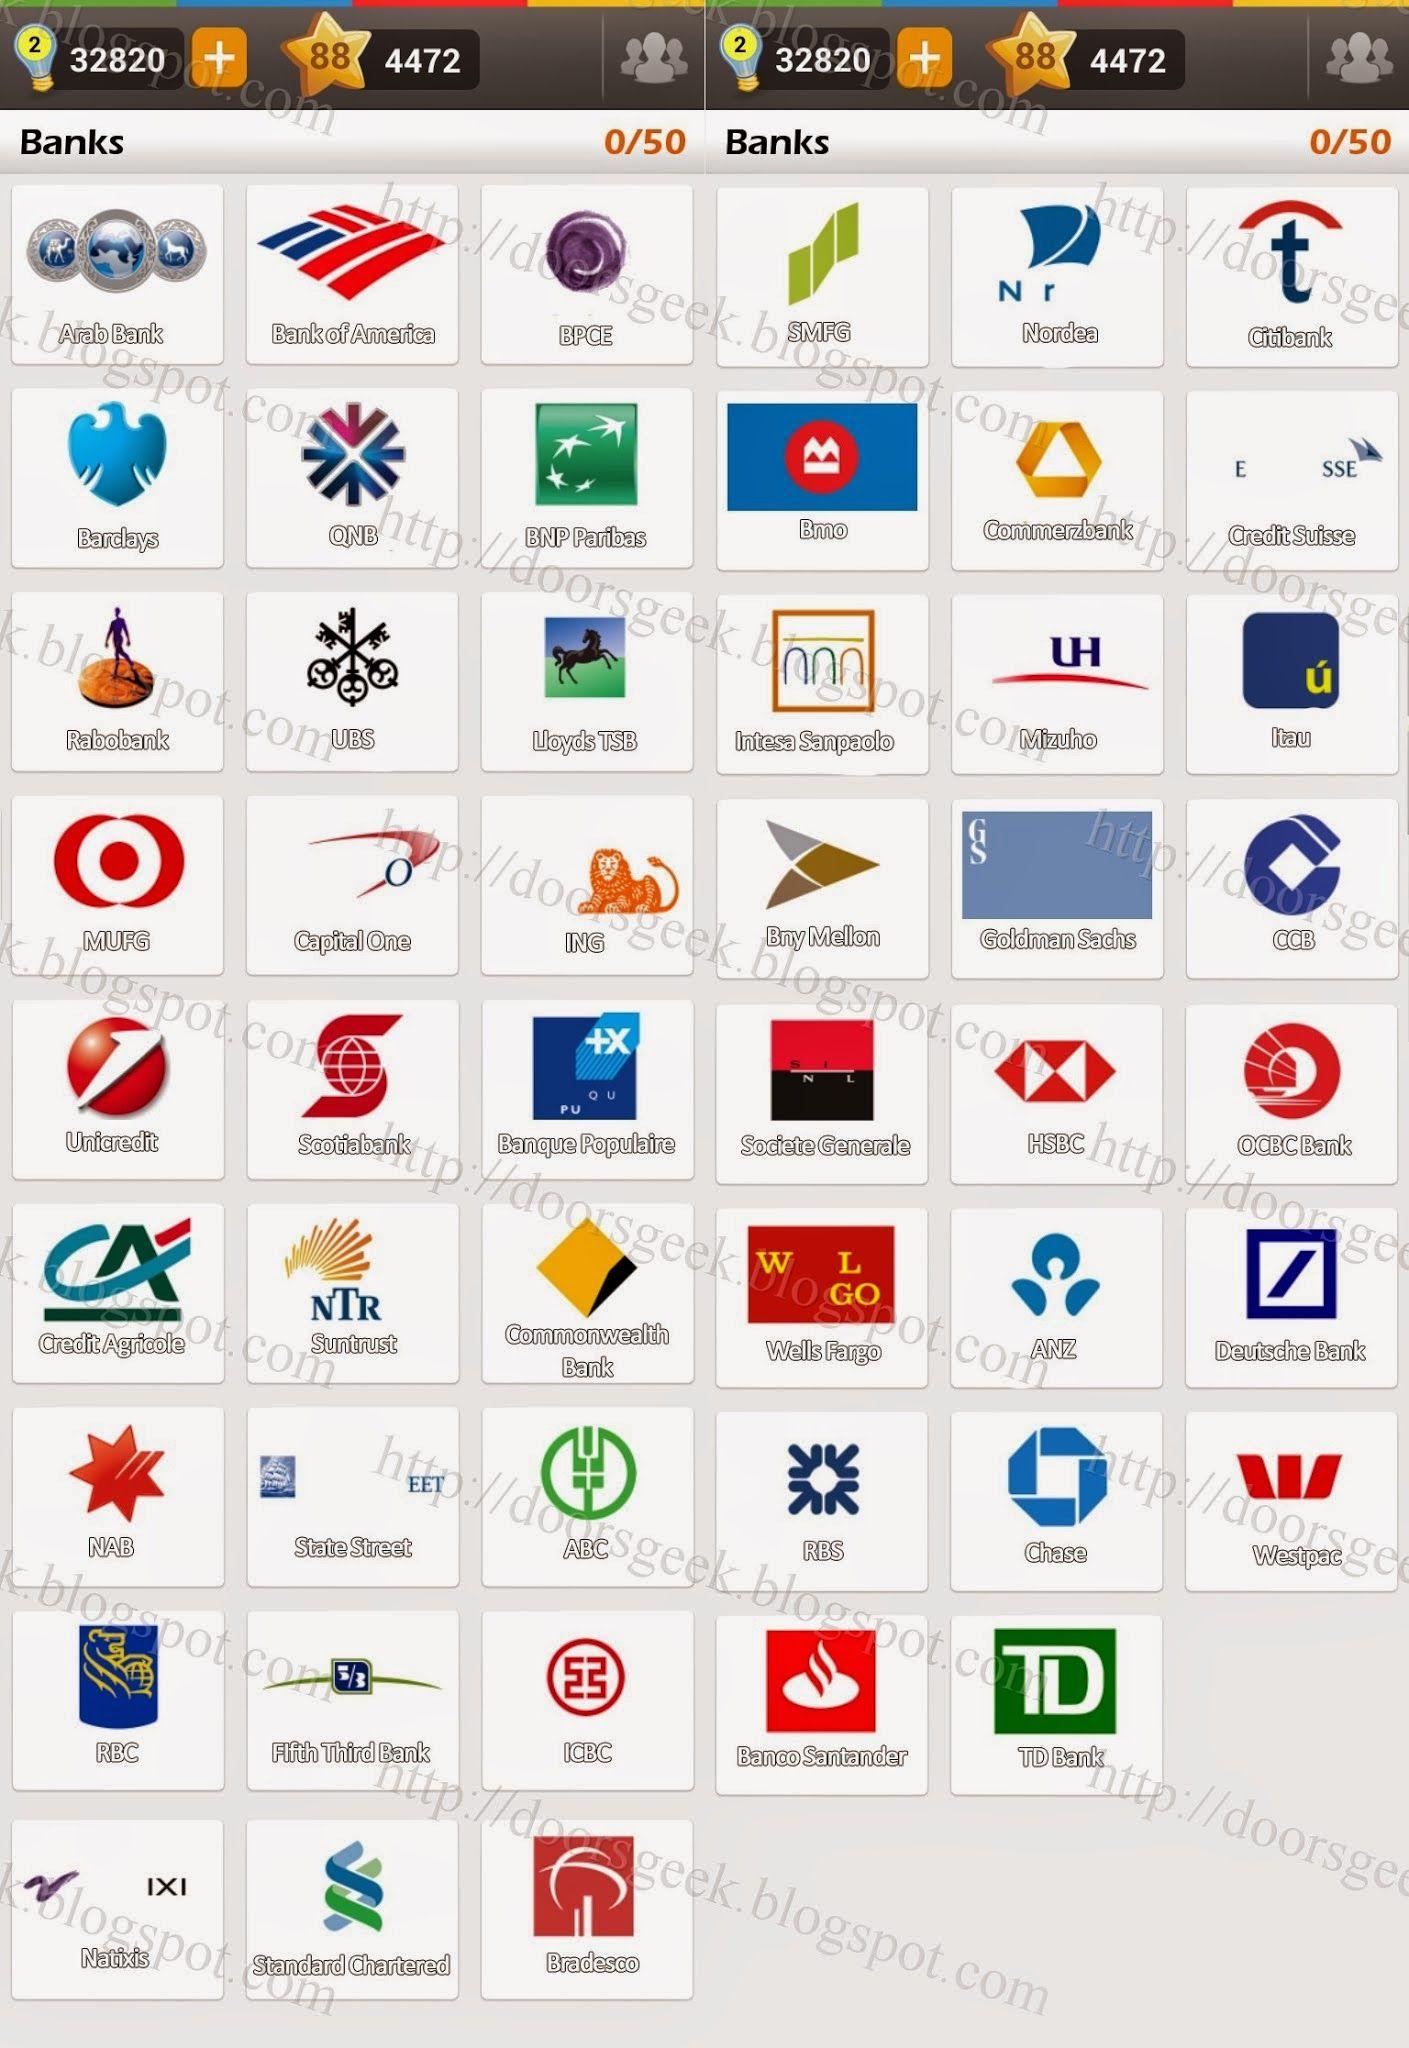 Banks Logo - Logo Game: Guess the Brand [Bonus] Banks ~ Doors Geek